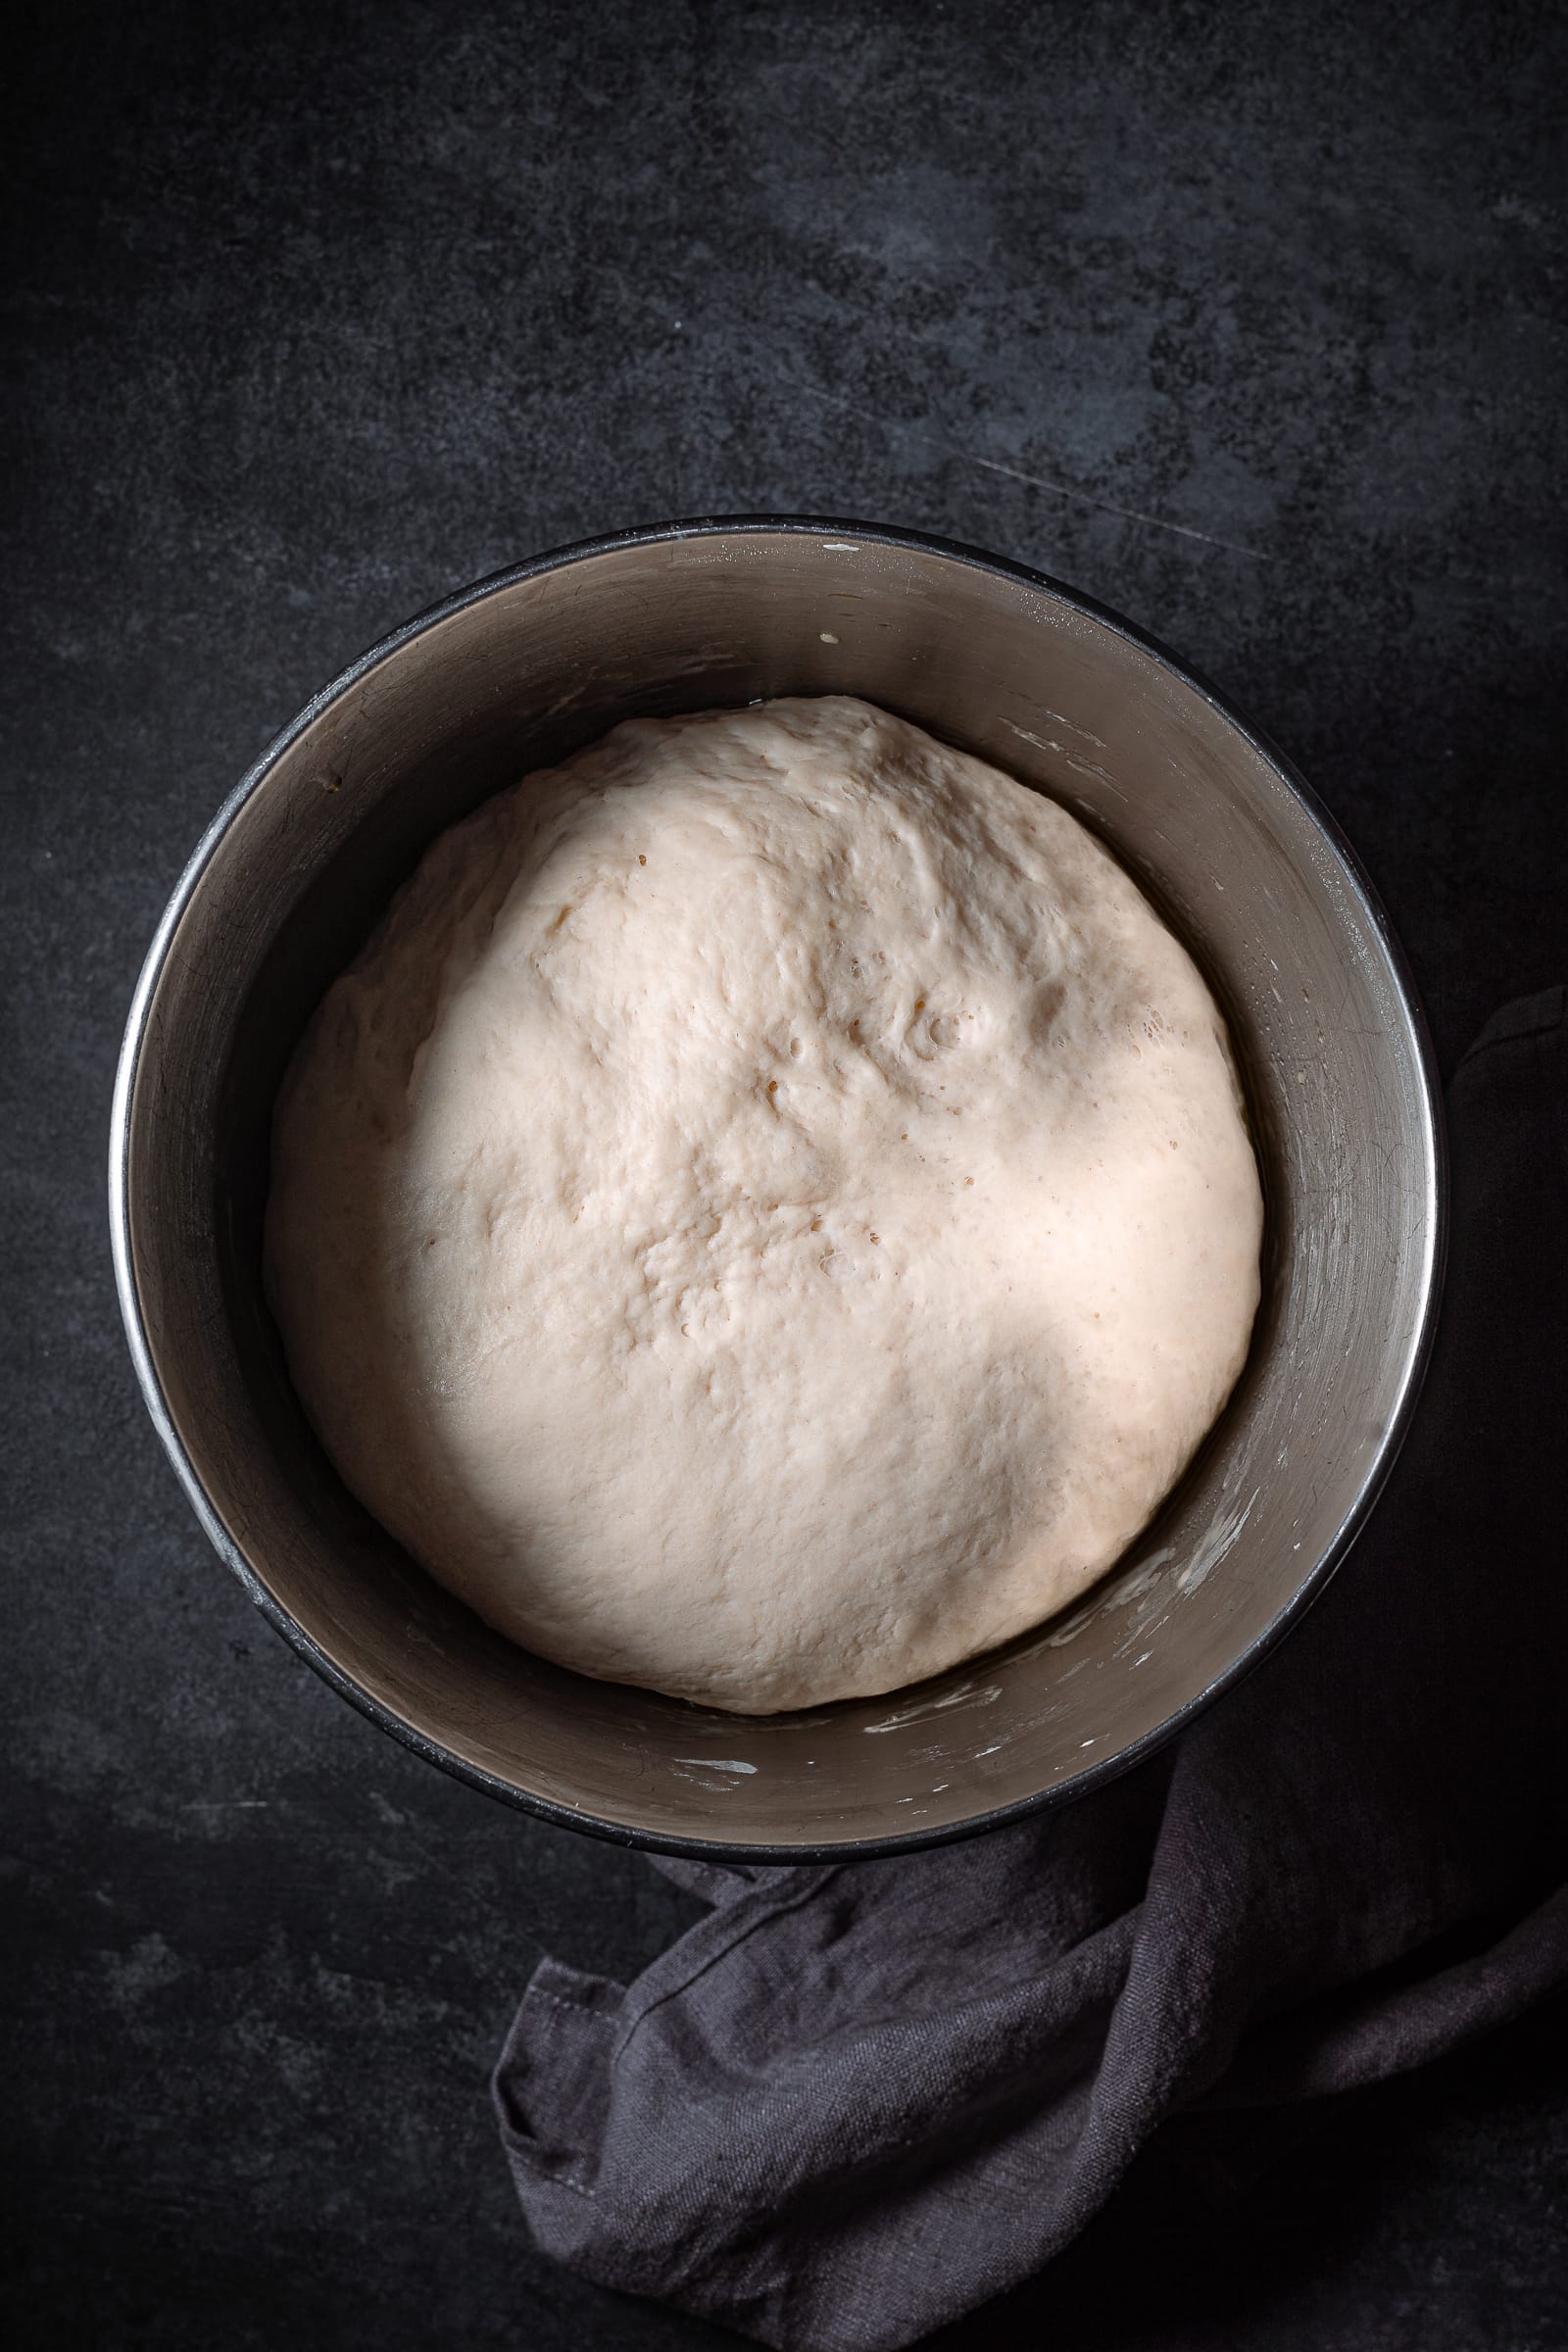 bagel dough after rising.